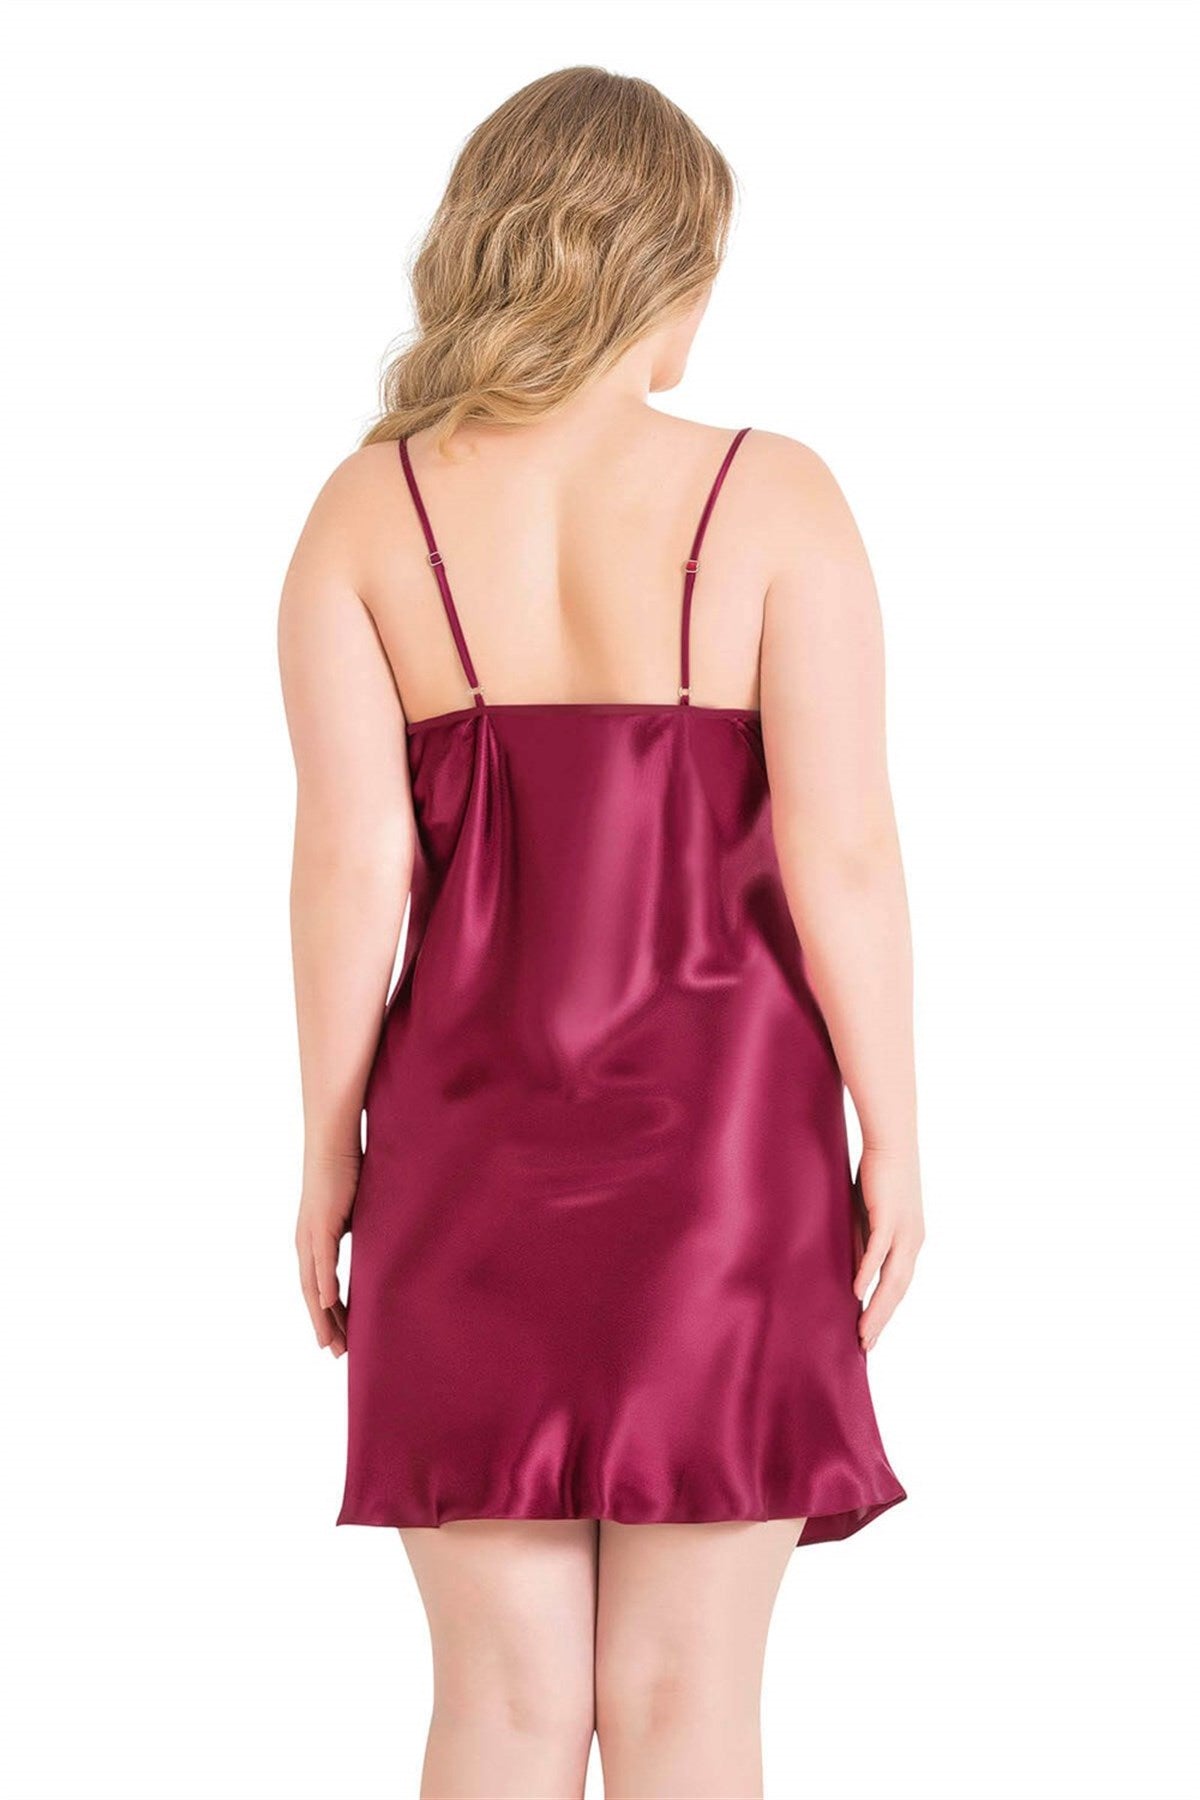 Plus Size Burgundy Short Satin Nightgowns